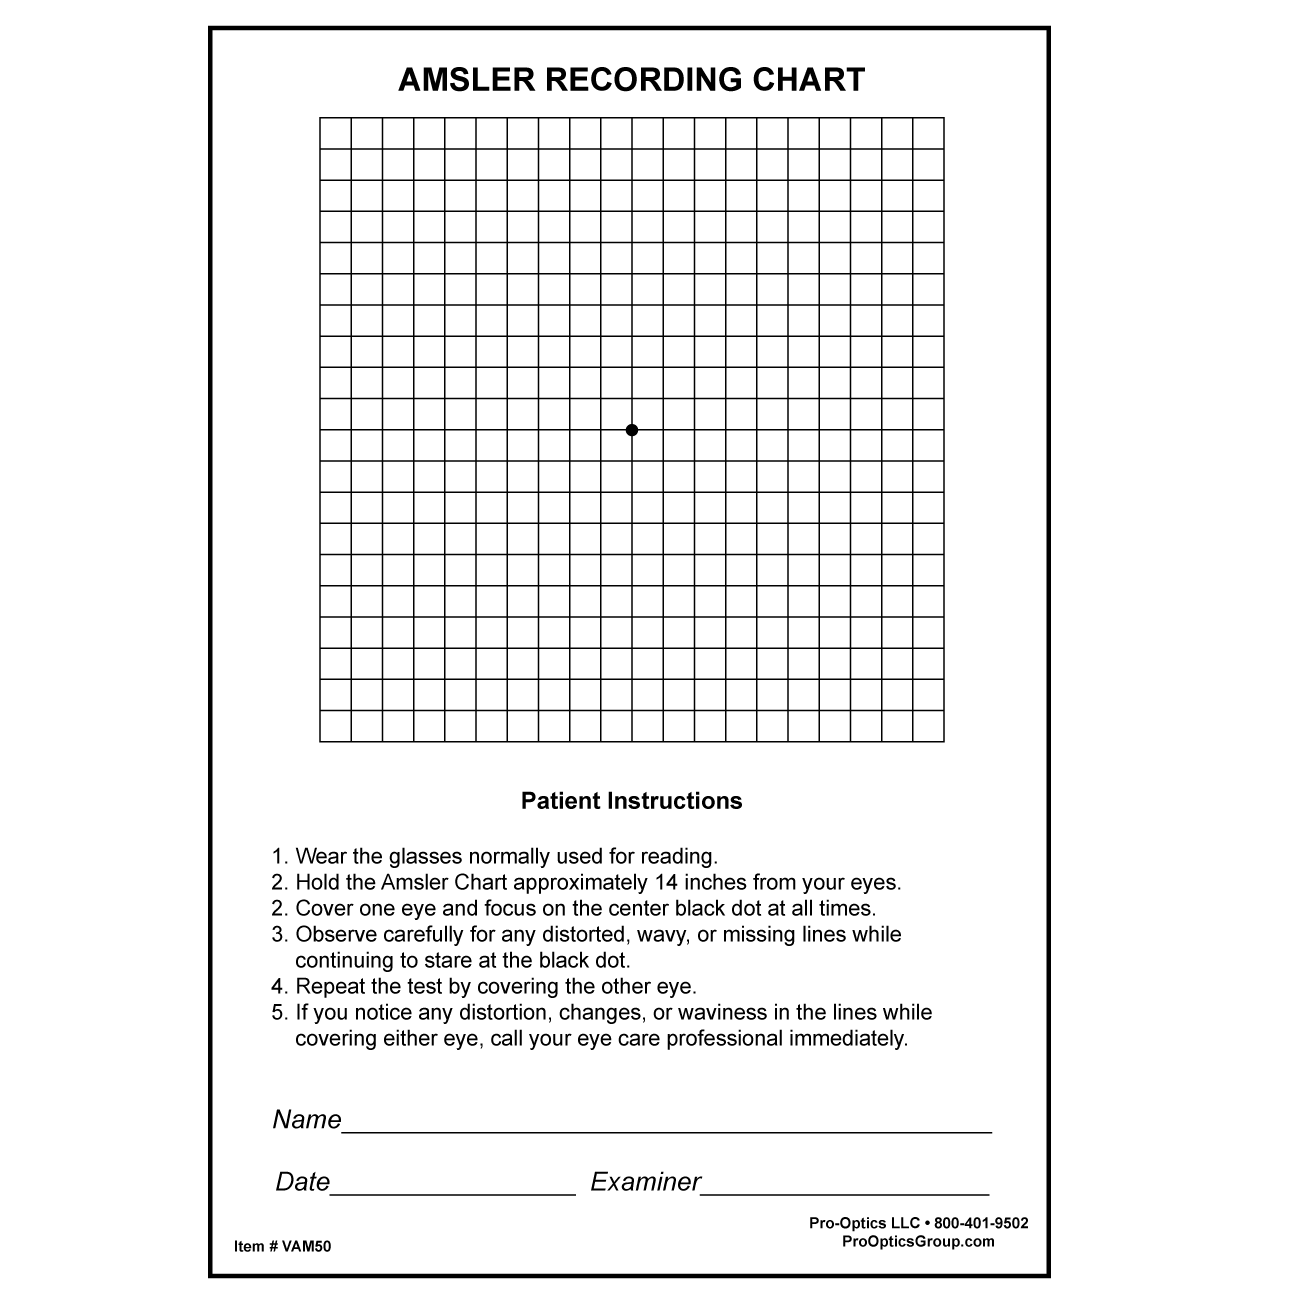 Pro-Optics Amsler Recording Pad - 50 Sheets (VAM50)-Pro-Optics LLC